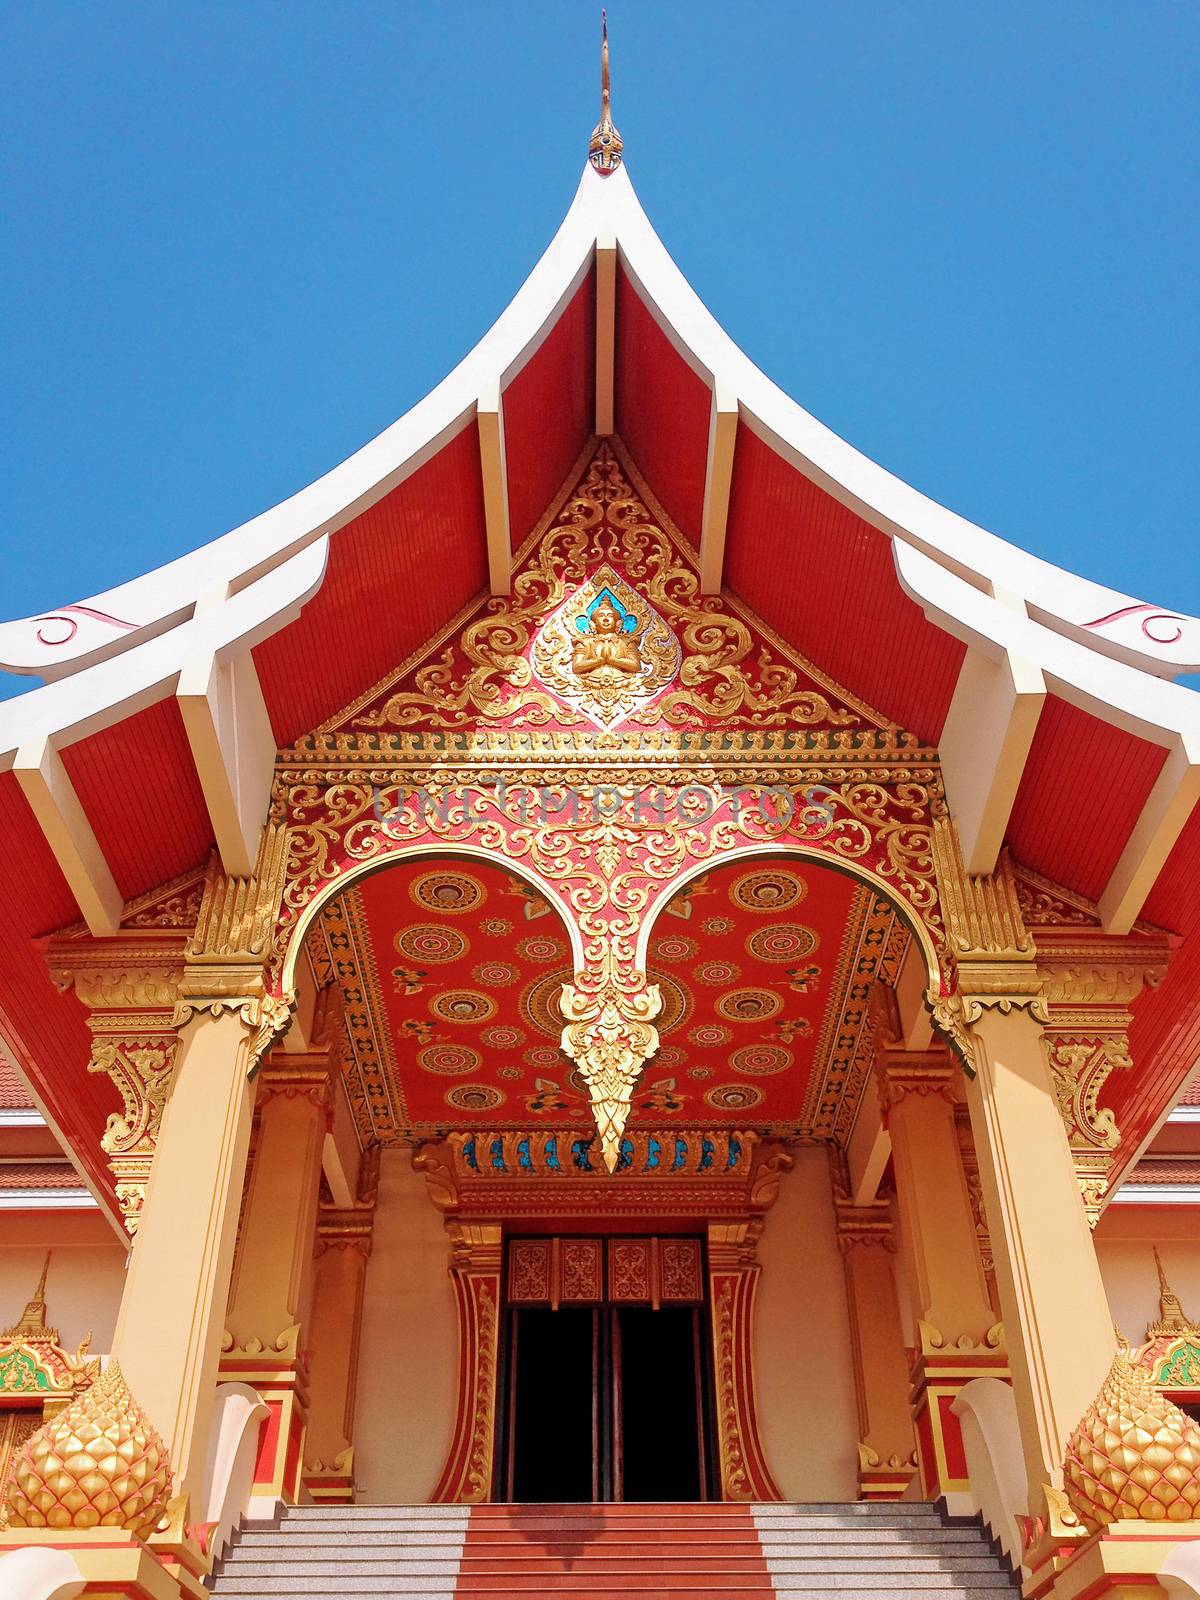 Entrance of Wat That Luang at Vientiane, Laos